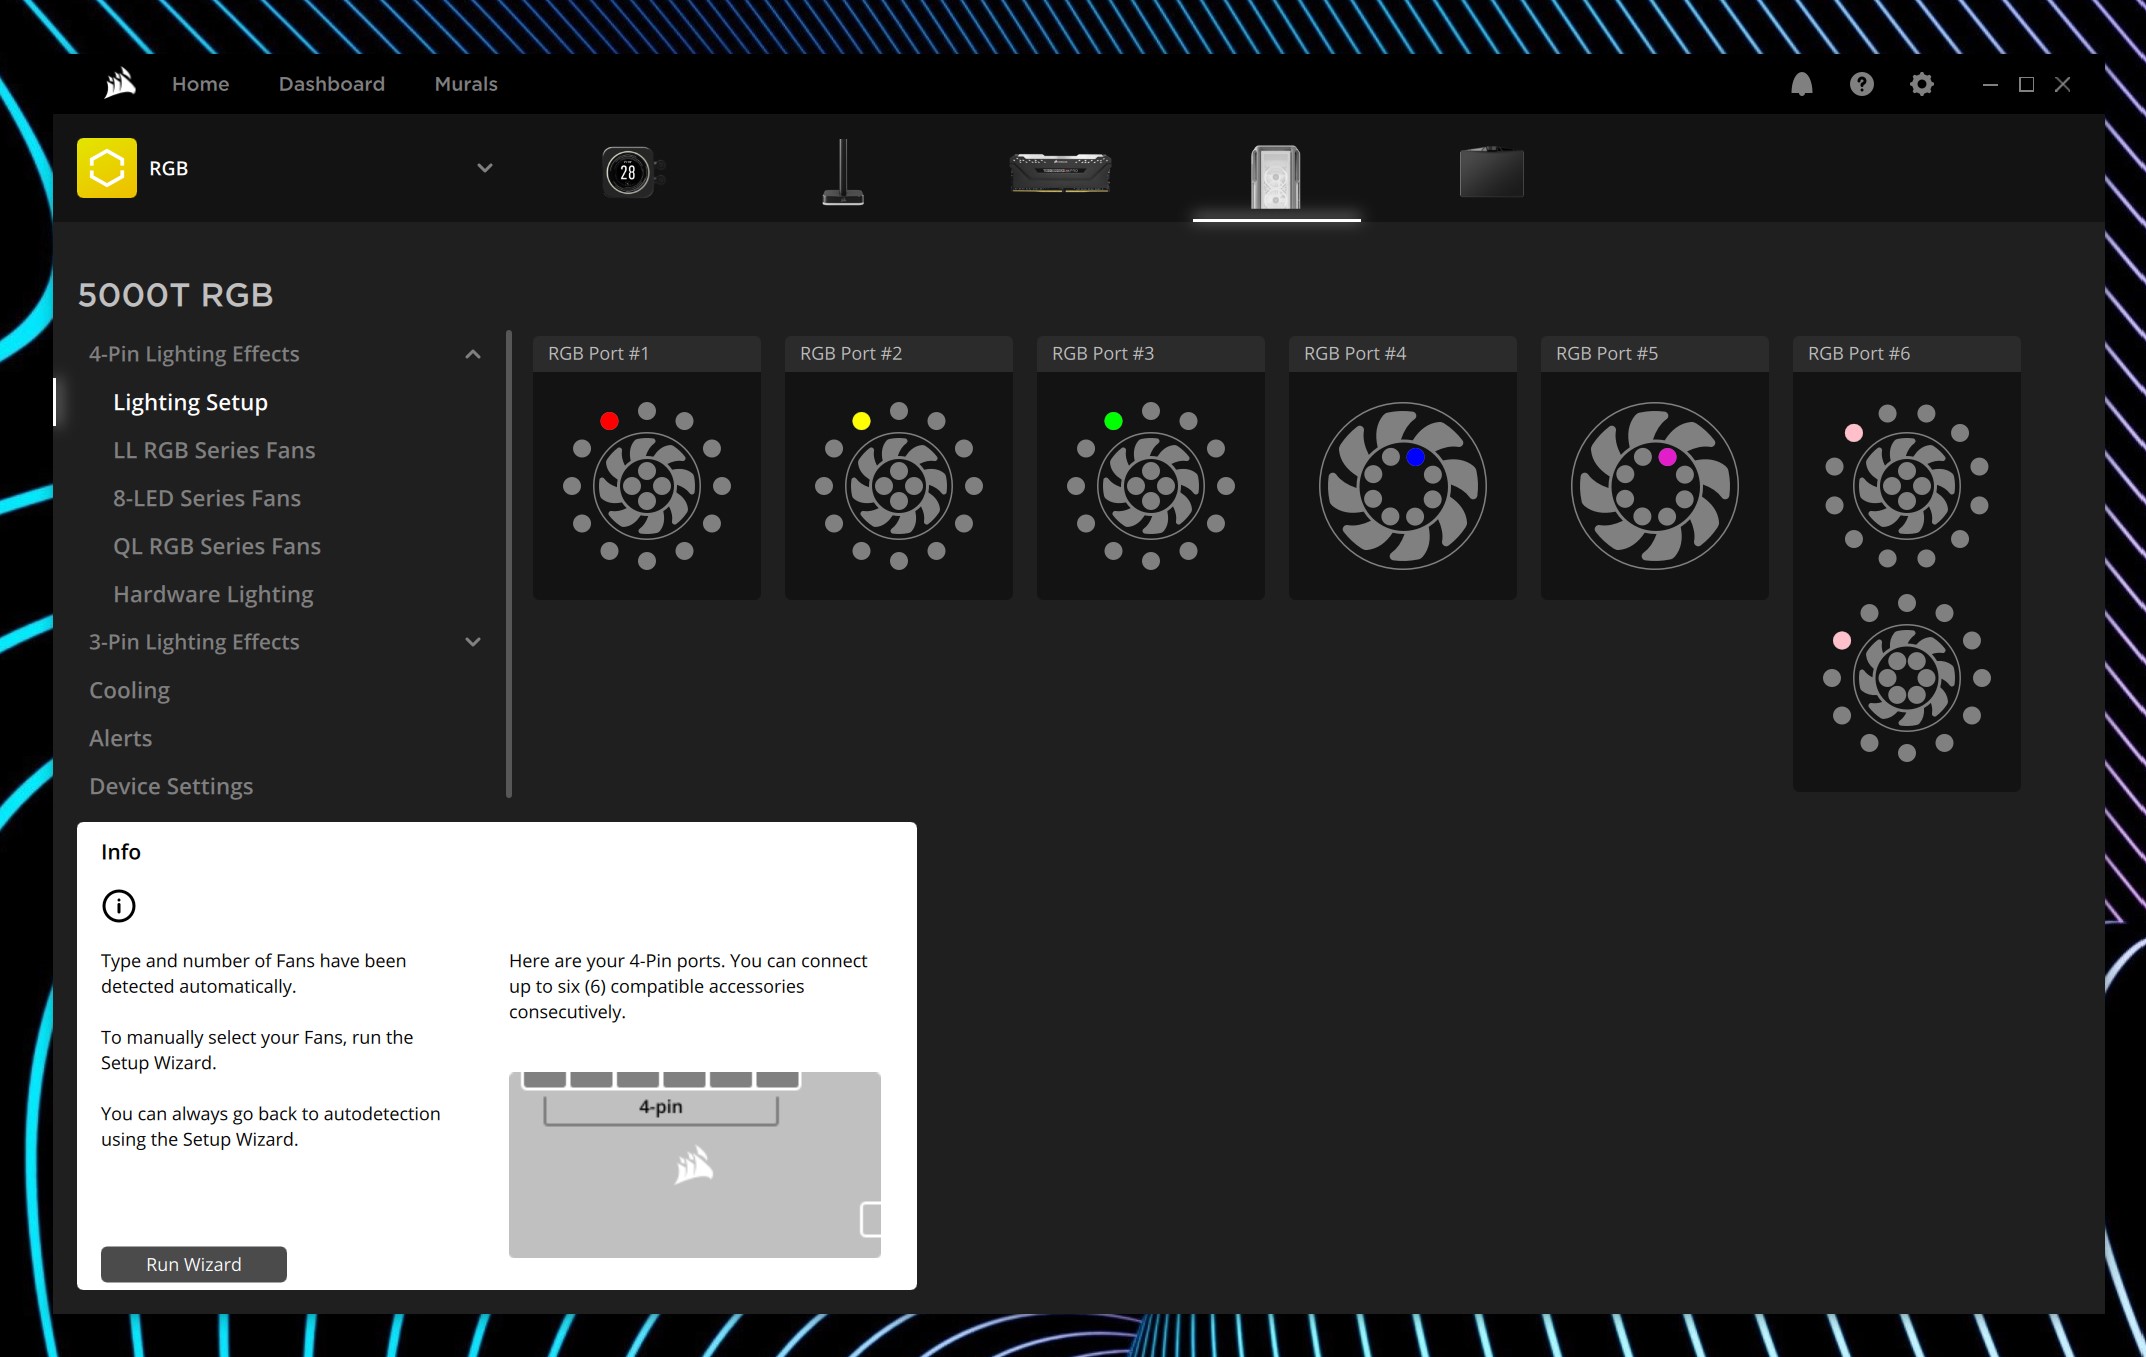 Screenshots showing Corsair's iCUE utility